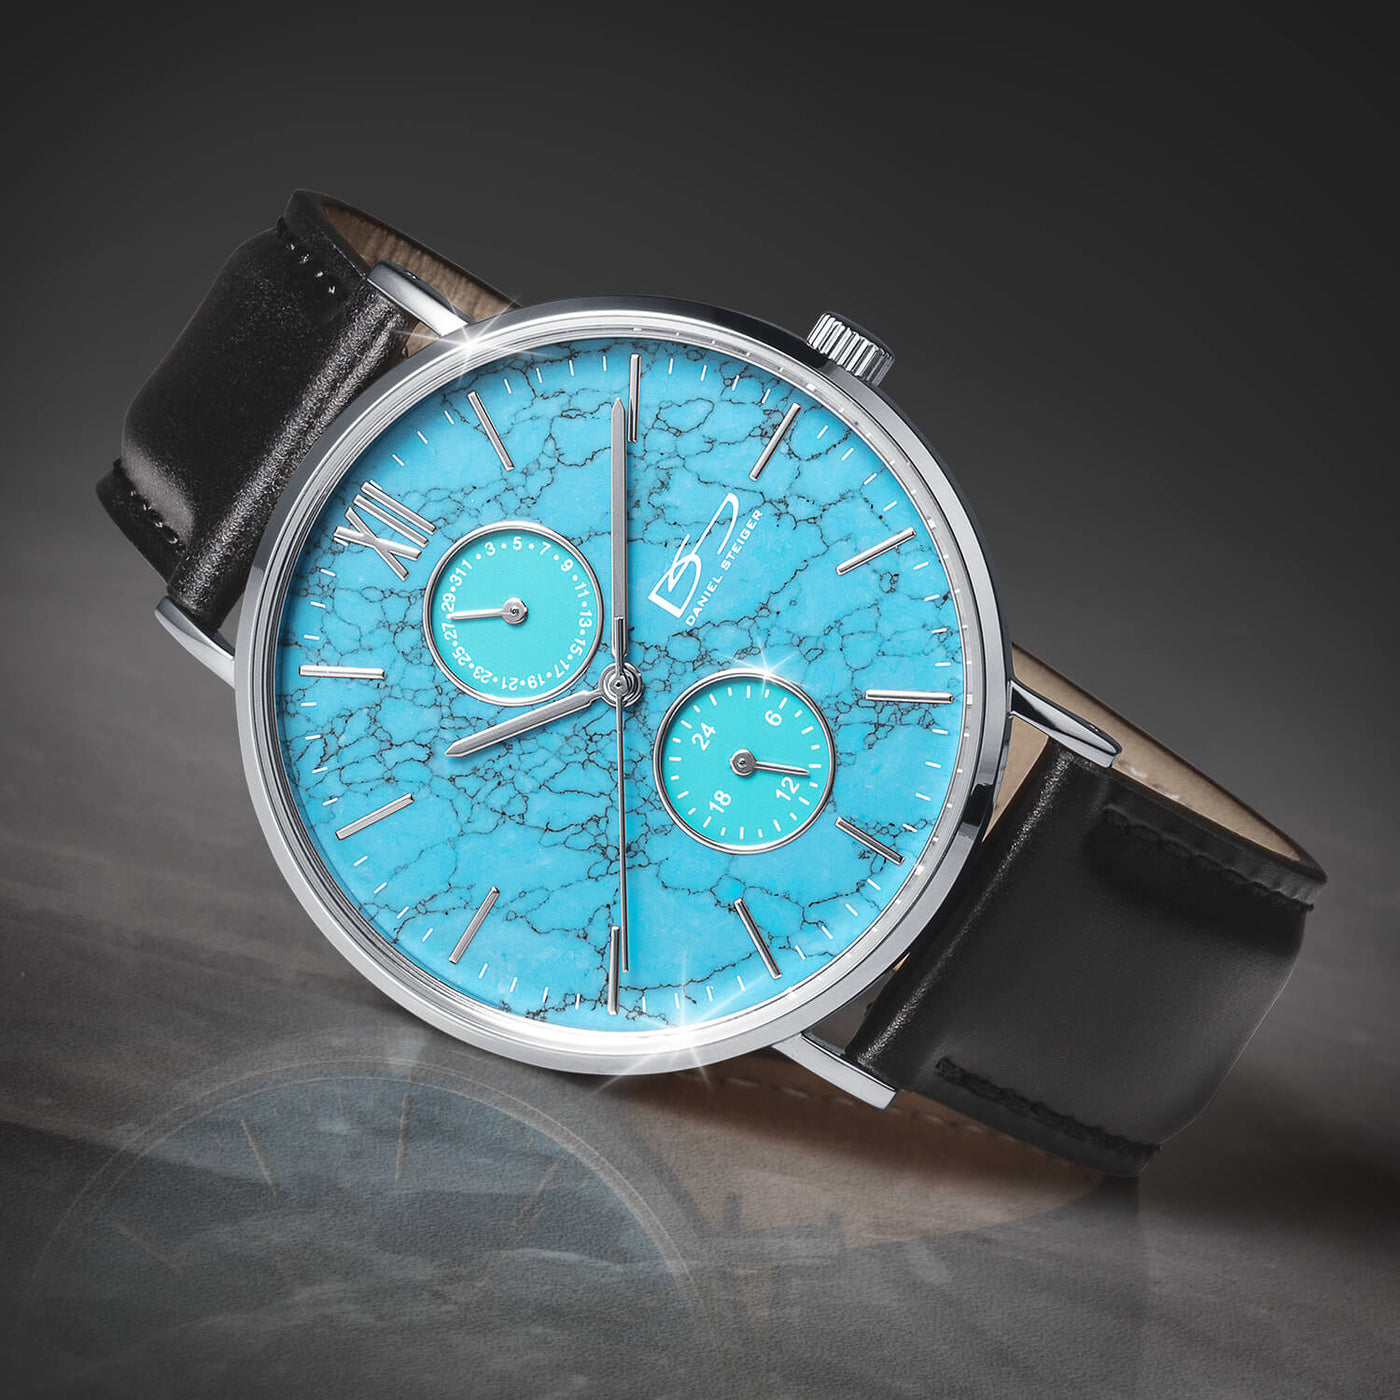 Daniel Steiger Natural Stone Turquoise Men's Watch